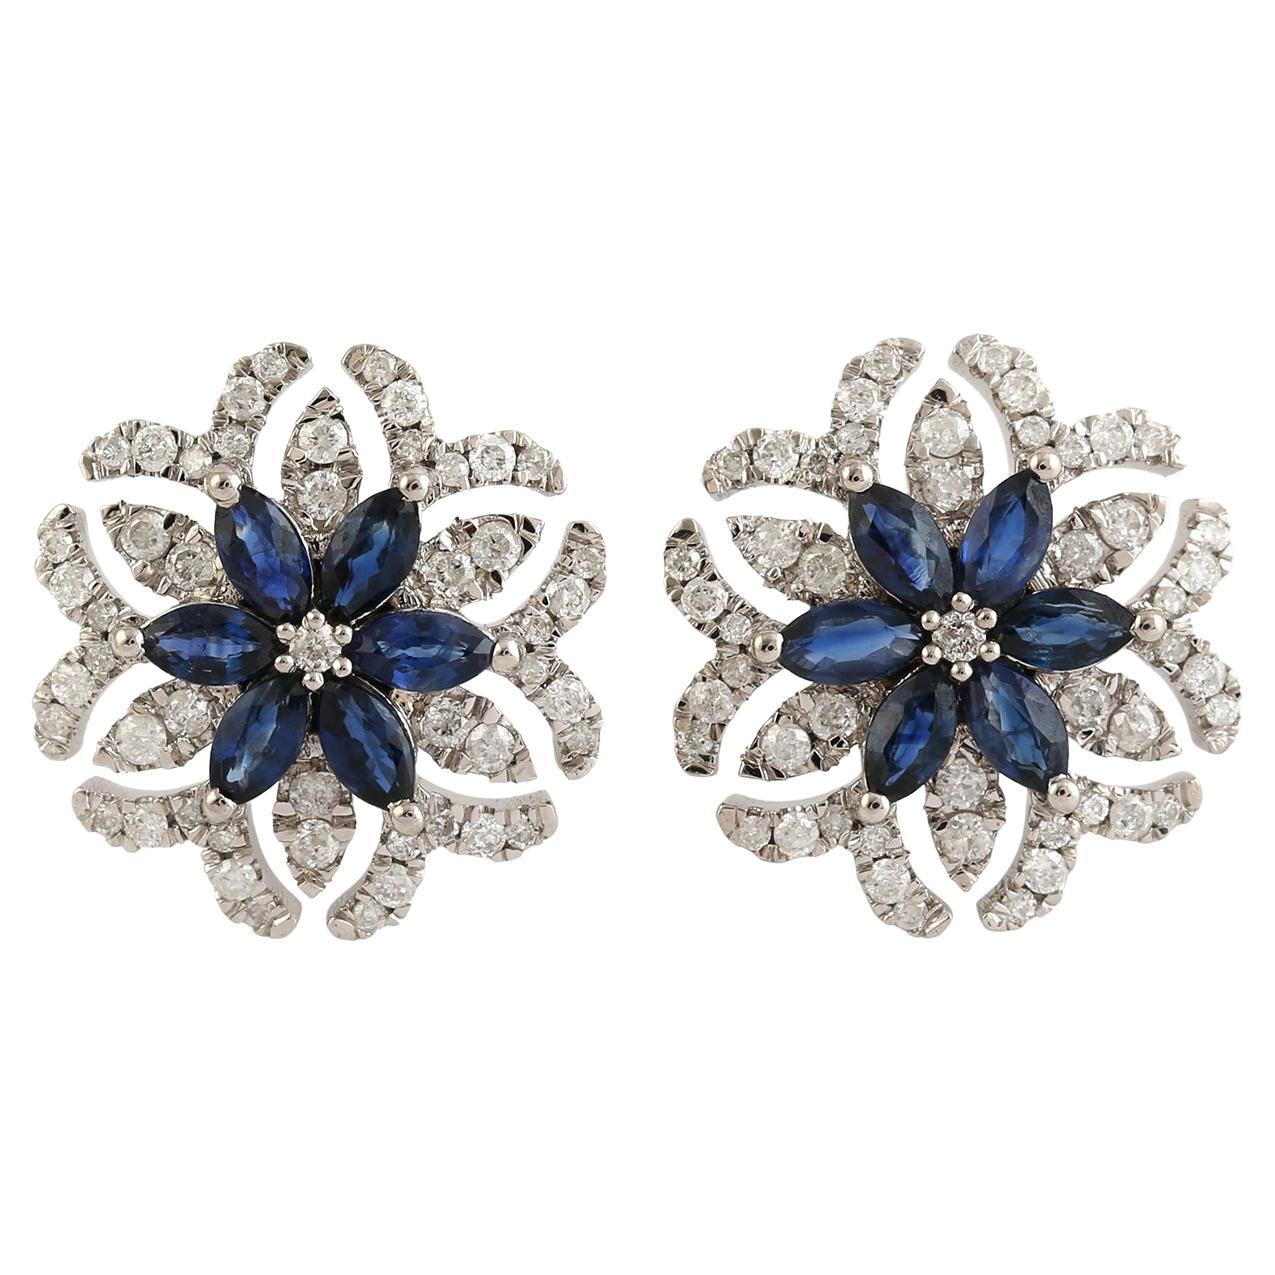 Flower Shaped Blue Sapphire & Diamonds Earrings Made in 18k White Gold